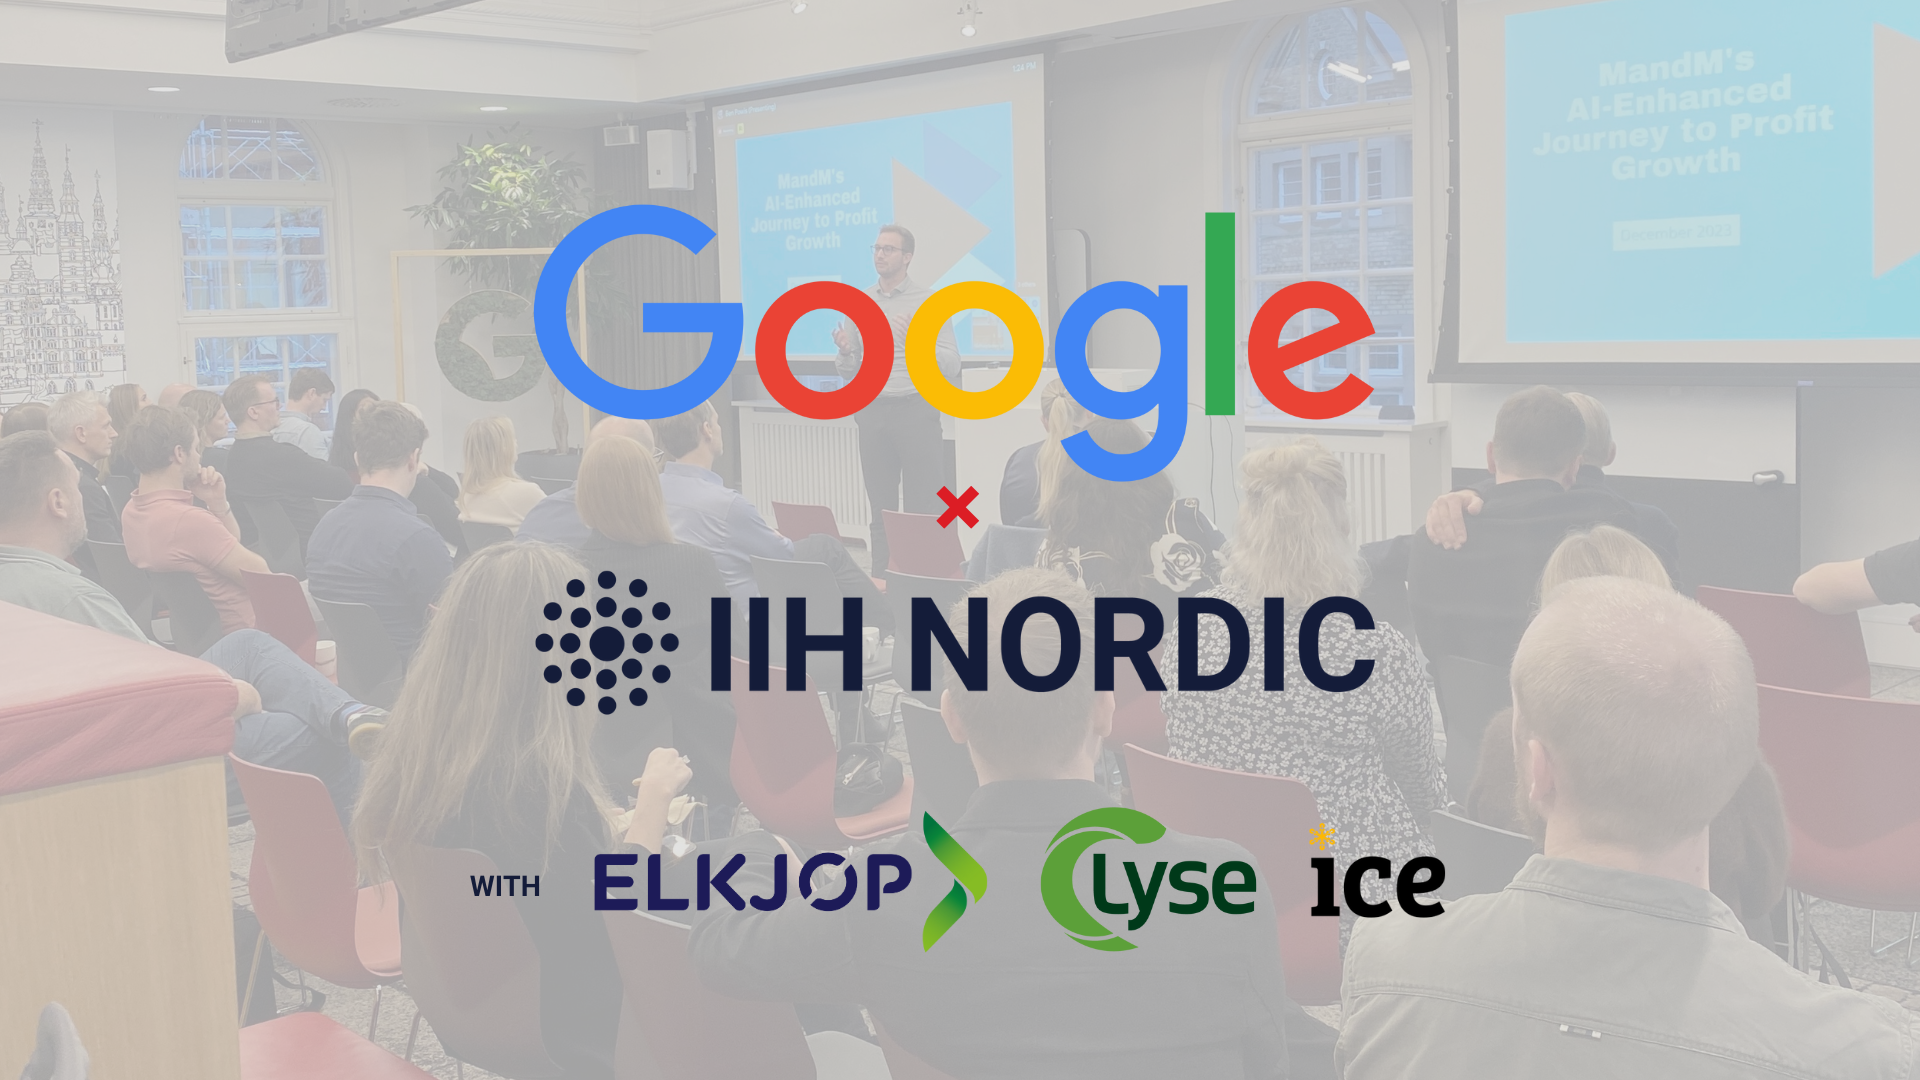 Google Oslo x IIH Nordic